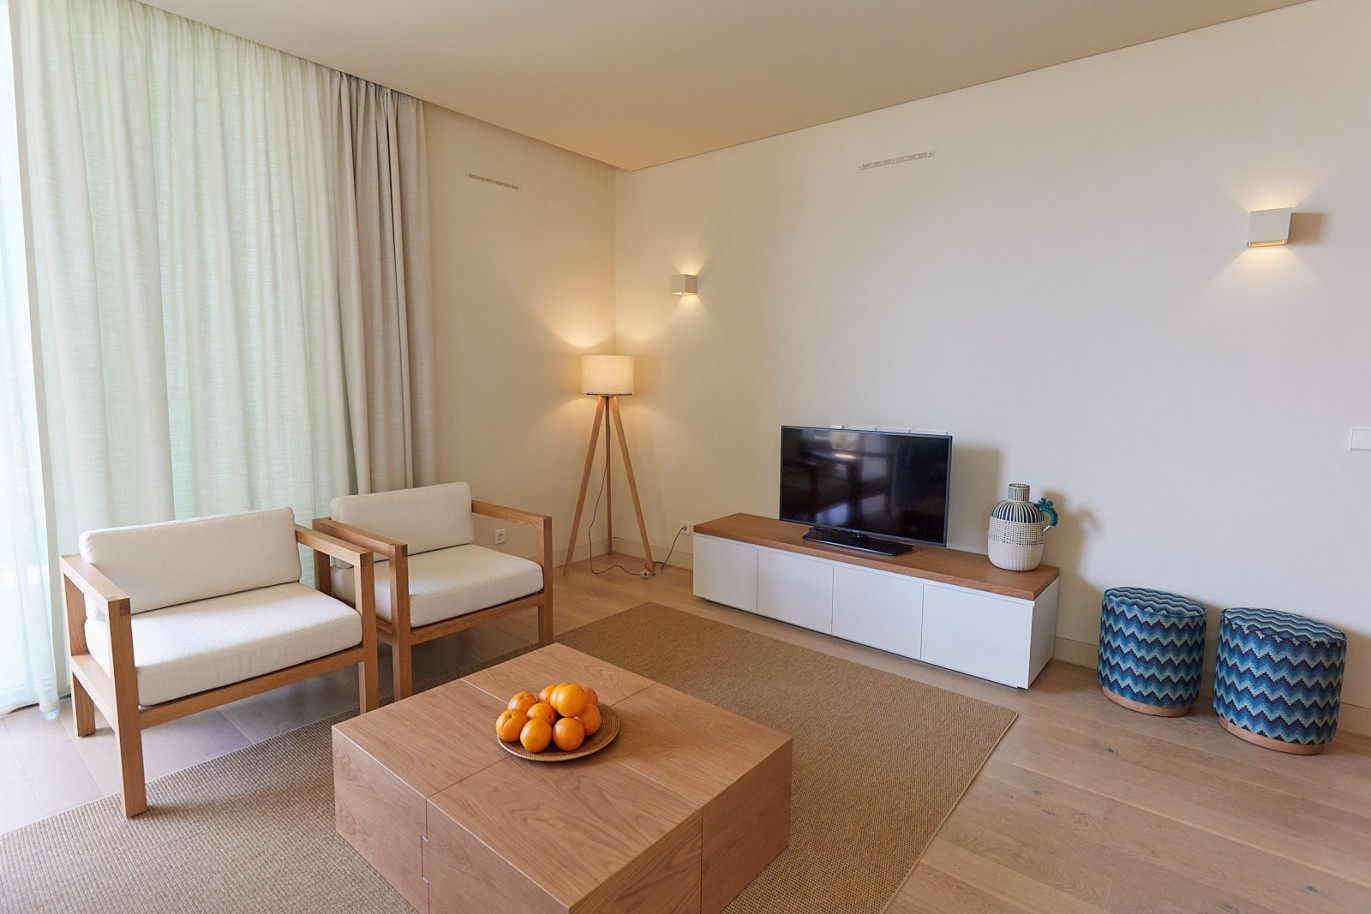 2 bedroom apartment in resort, for sale in Porches, Algarve_228803